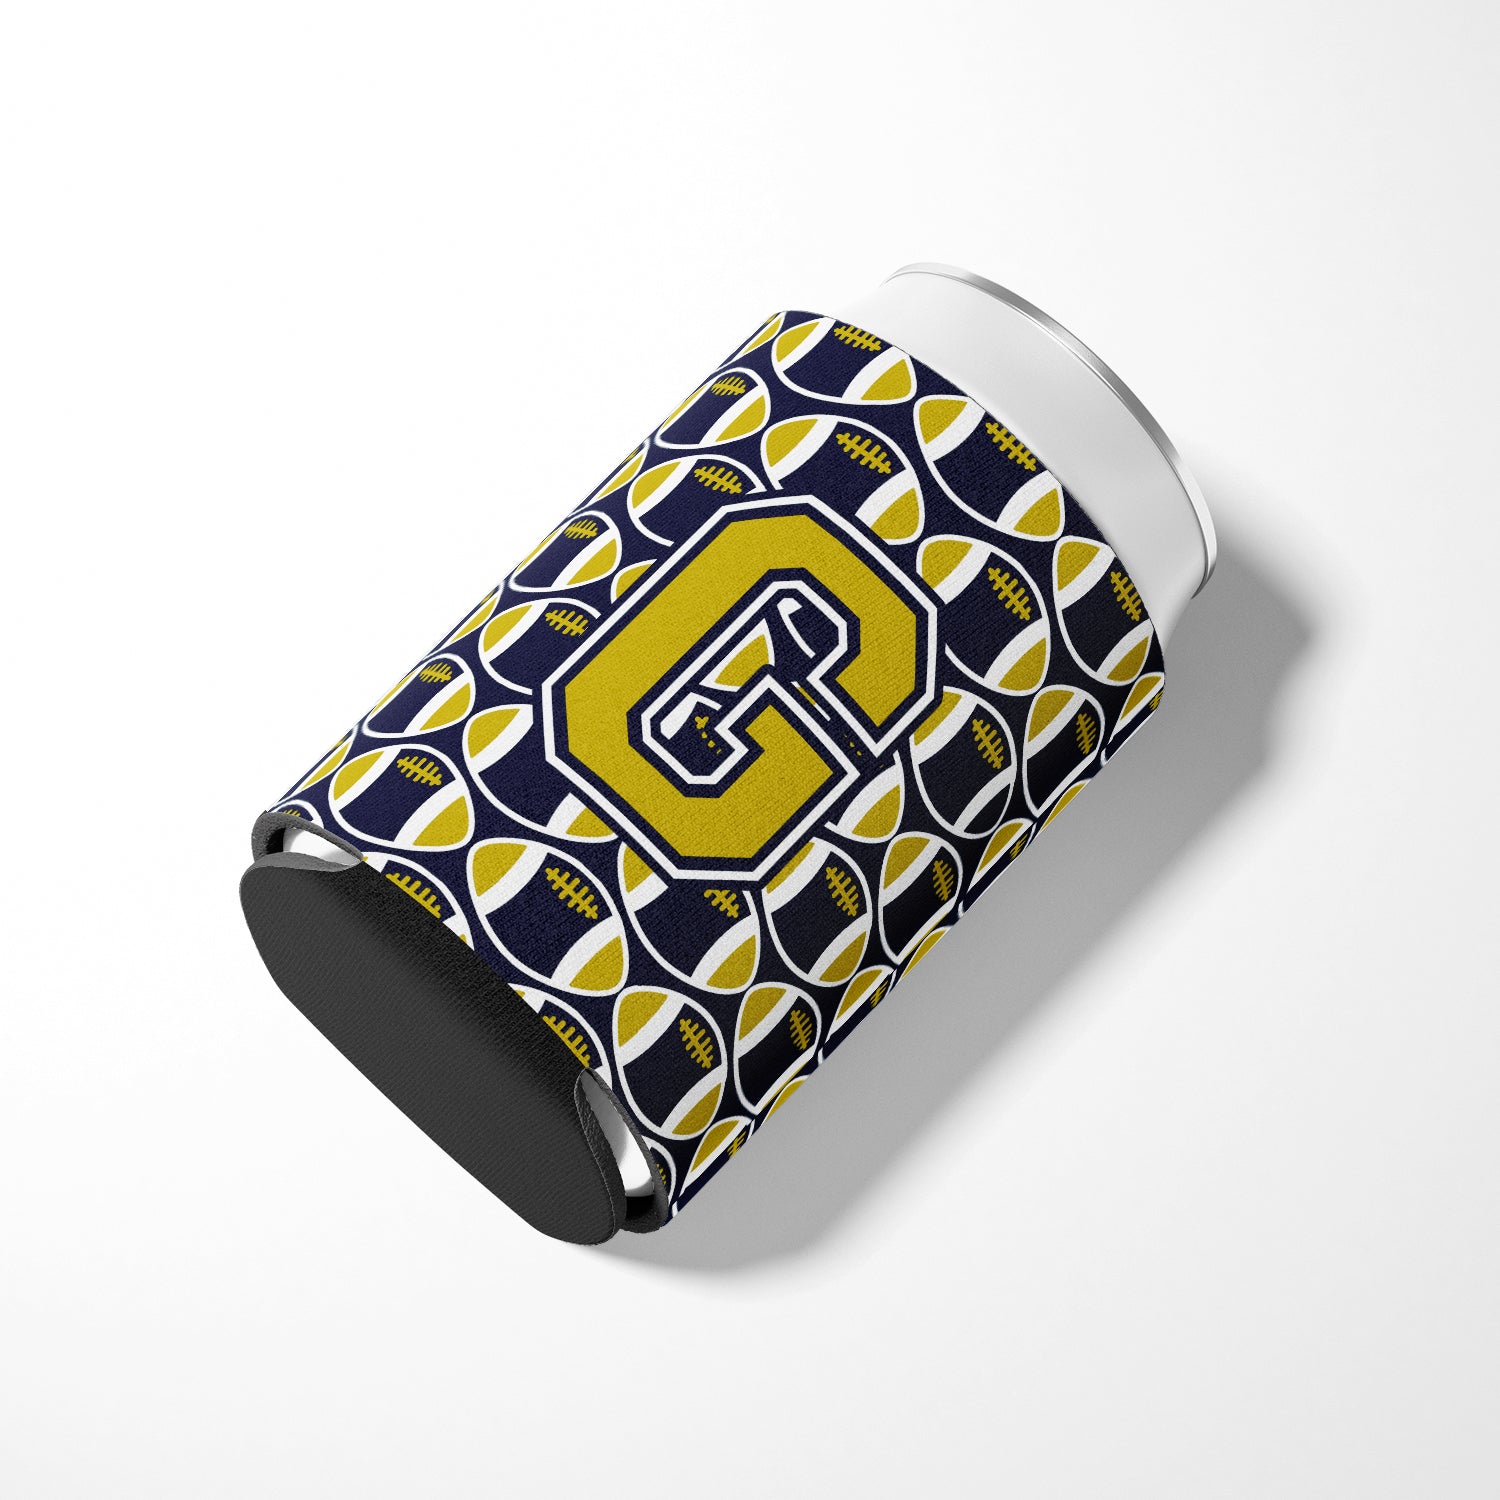 Letter G Football Blue and Gold Can or Bottle Hugger CJ1074-GCC